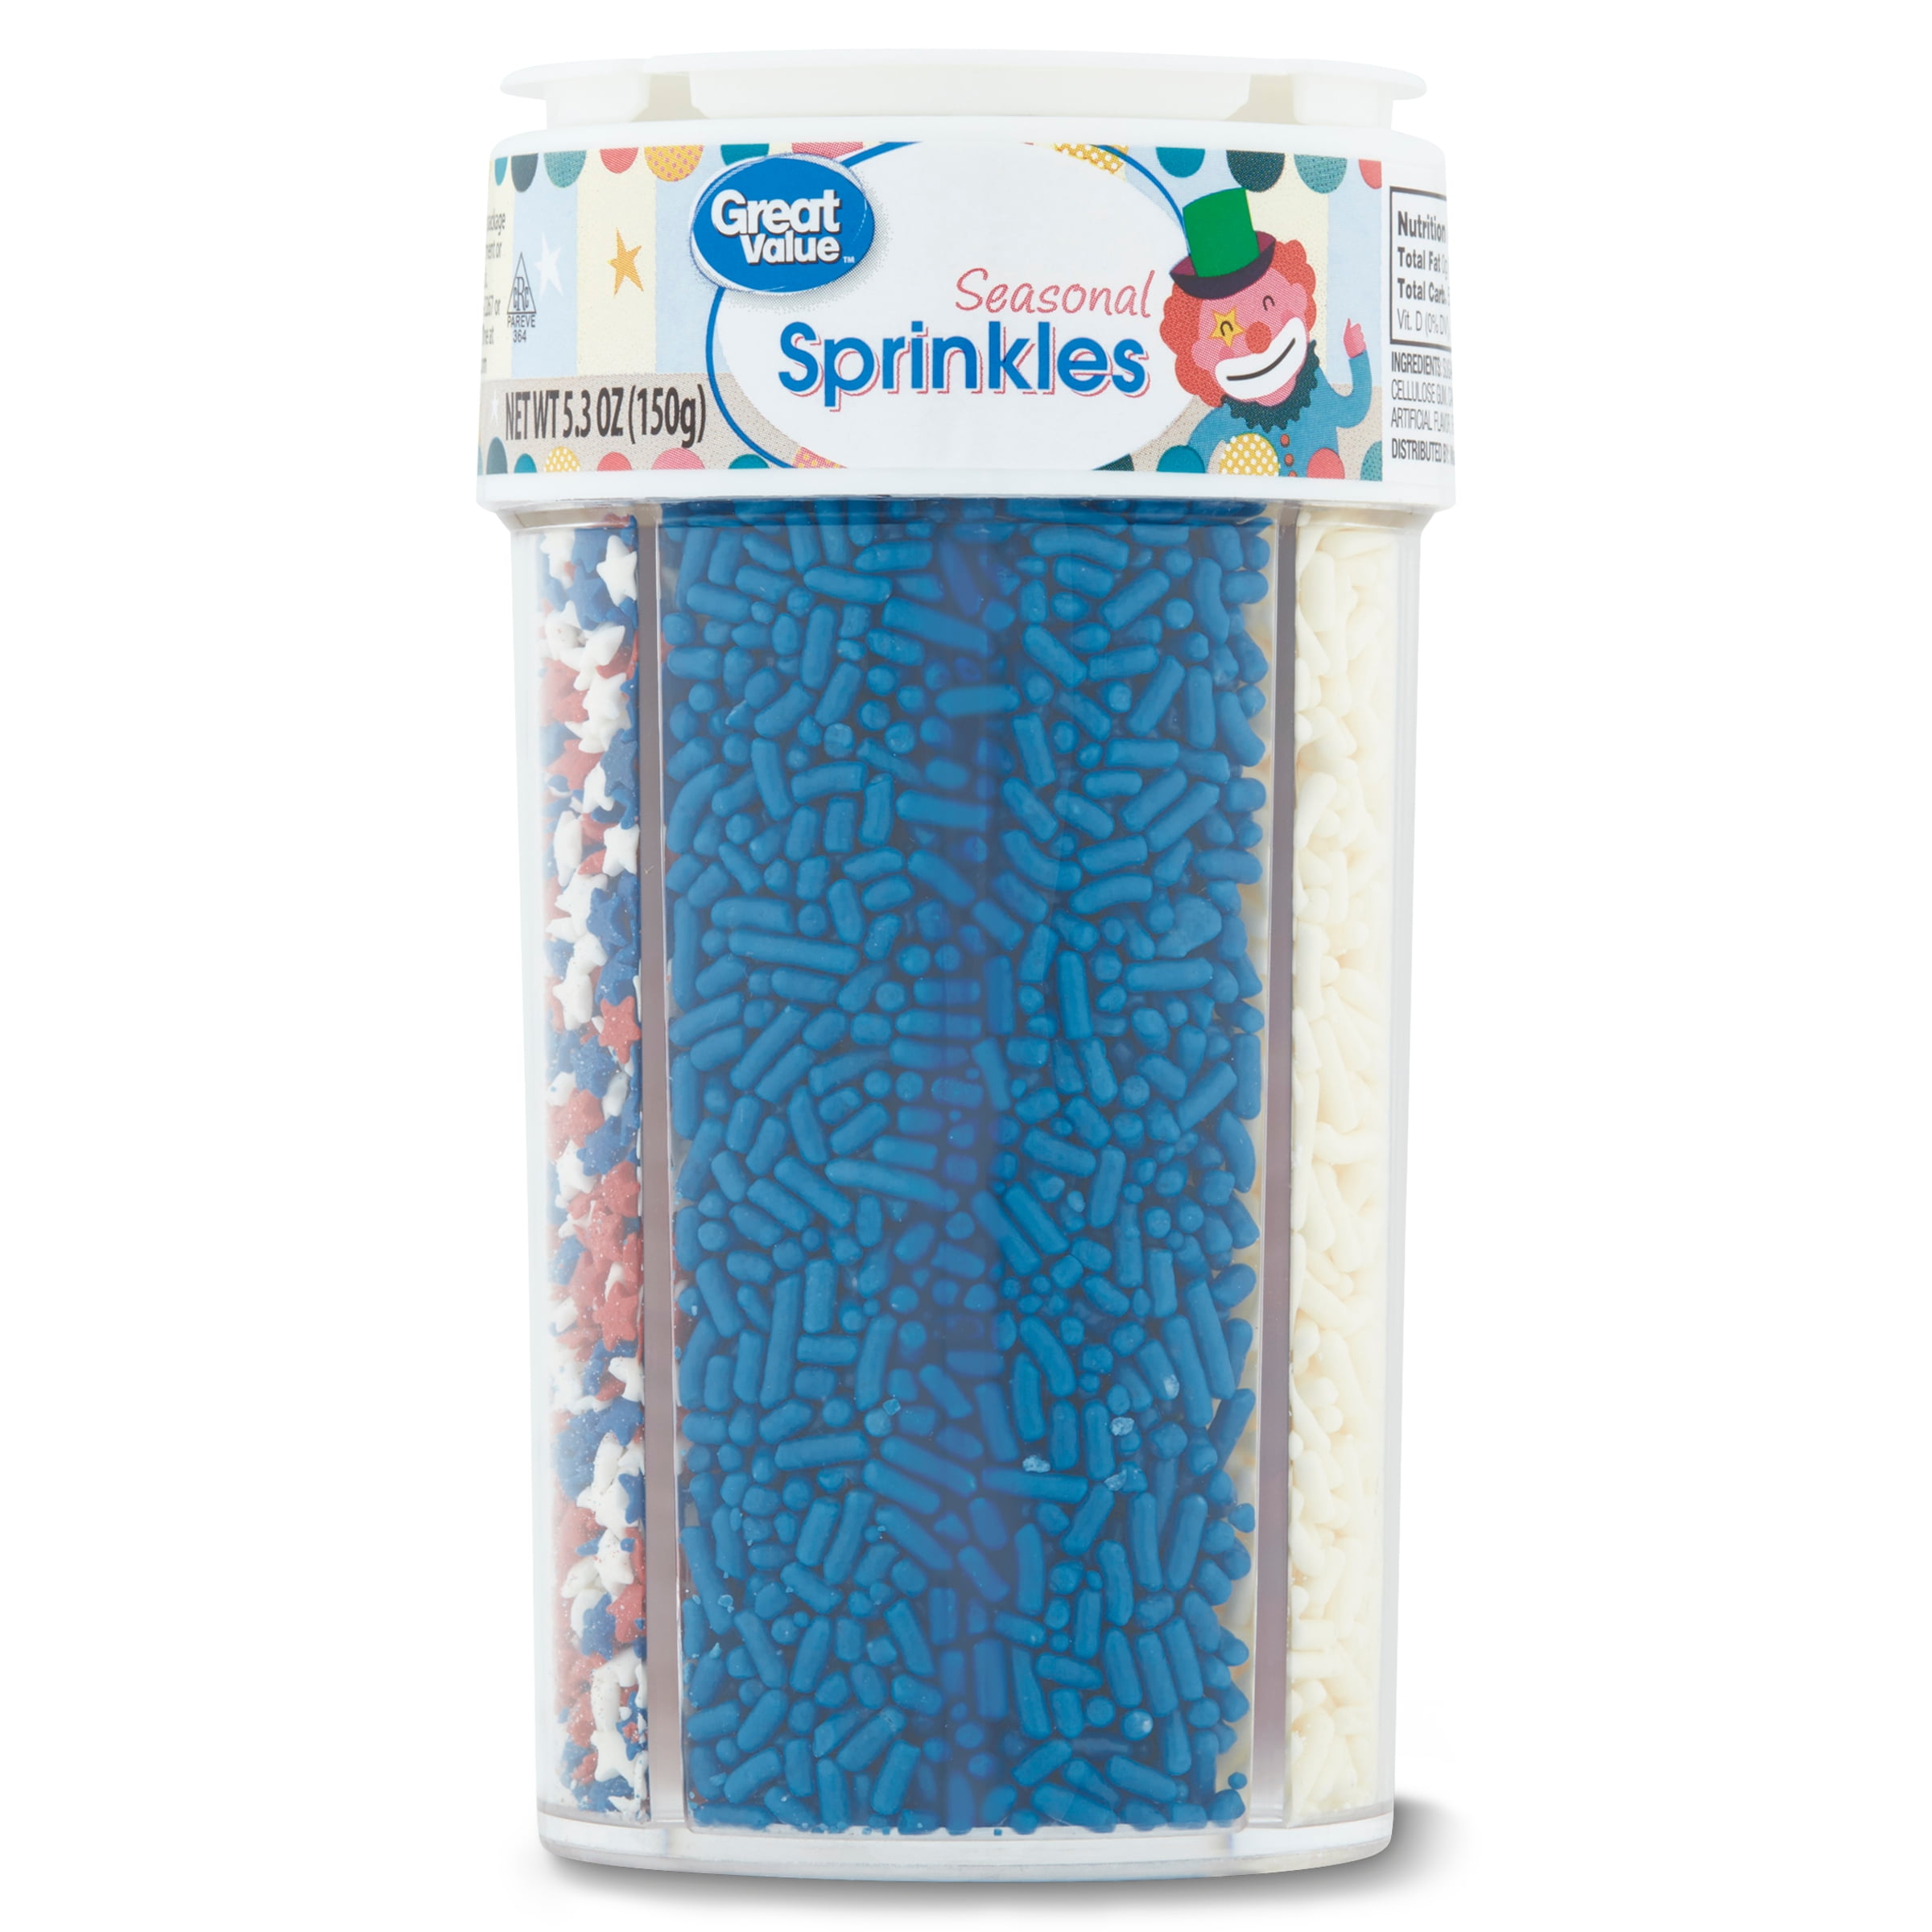 Great Value Seasonal Sprinkles, Patriot, 5.3 oz